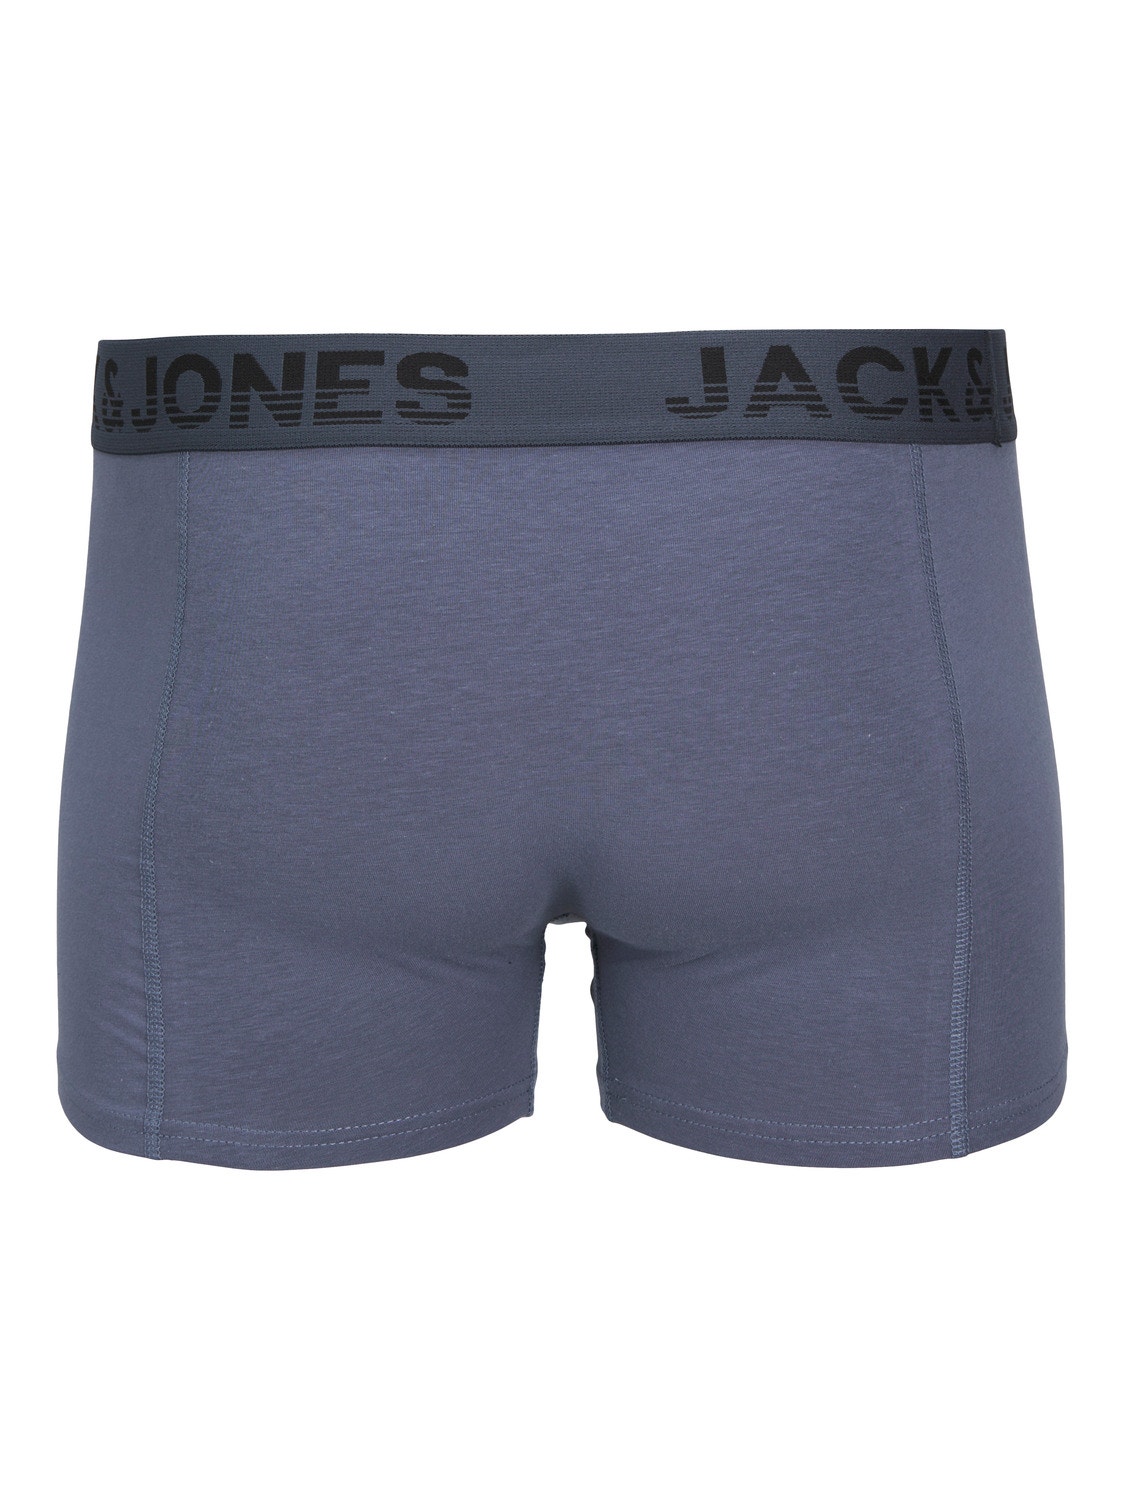 Jack & Jones Cotton Sense Trunk, 3-Pack, Black - Underwear